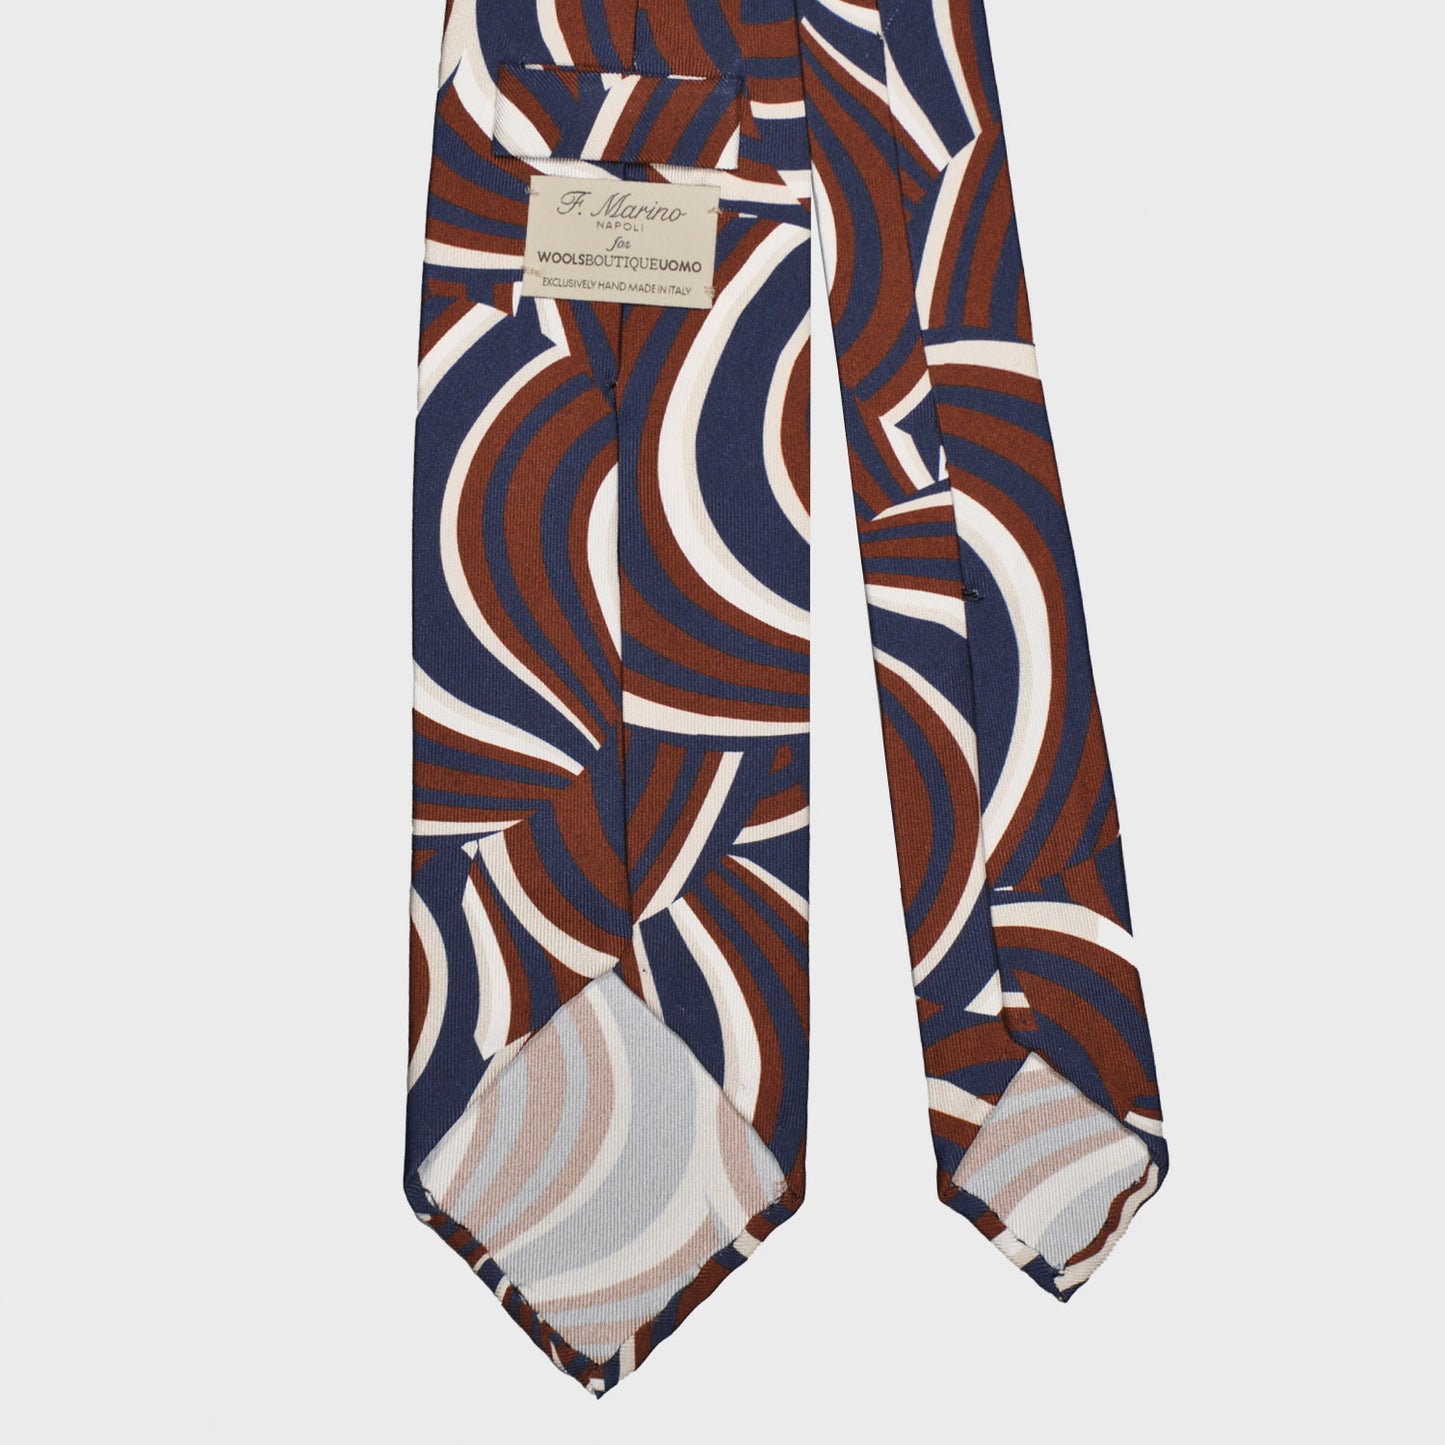 F.Marino Silk Tie 3 Folds Waves Brown-Wools Boutique Uomo